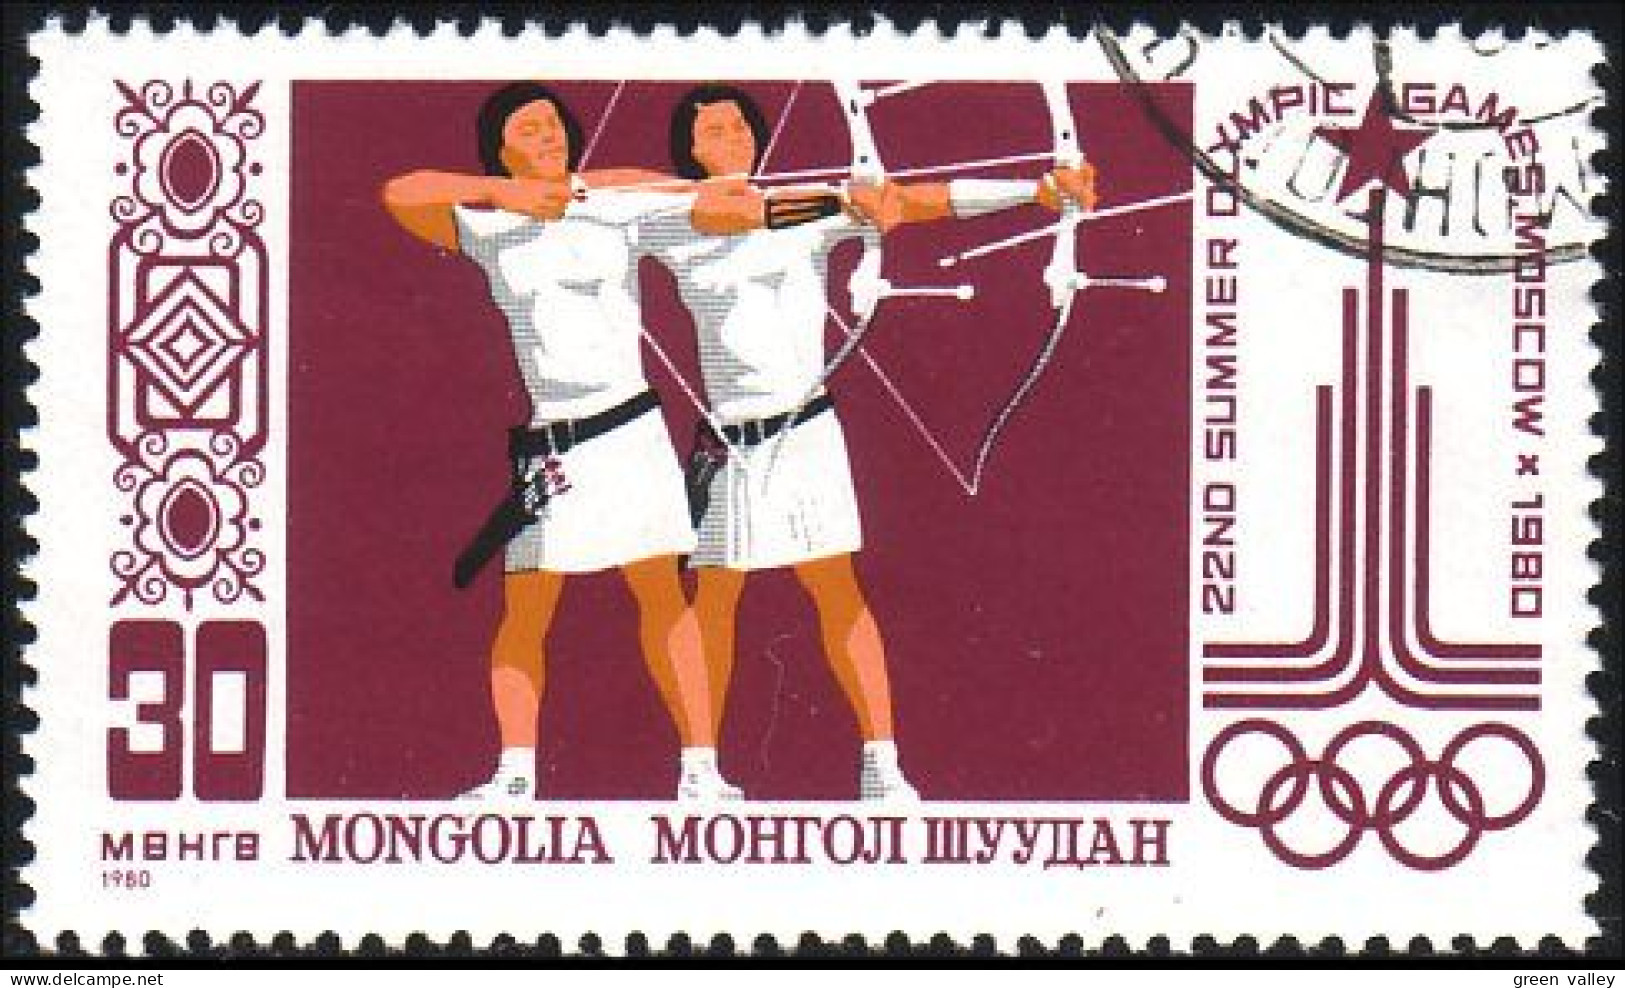 620 Mongolie Jeux De Moscou Tir à L'arc Bow And Arrow Moscow Games (MNG-24) - Boogschieten